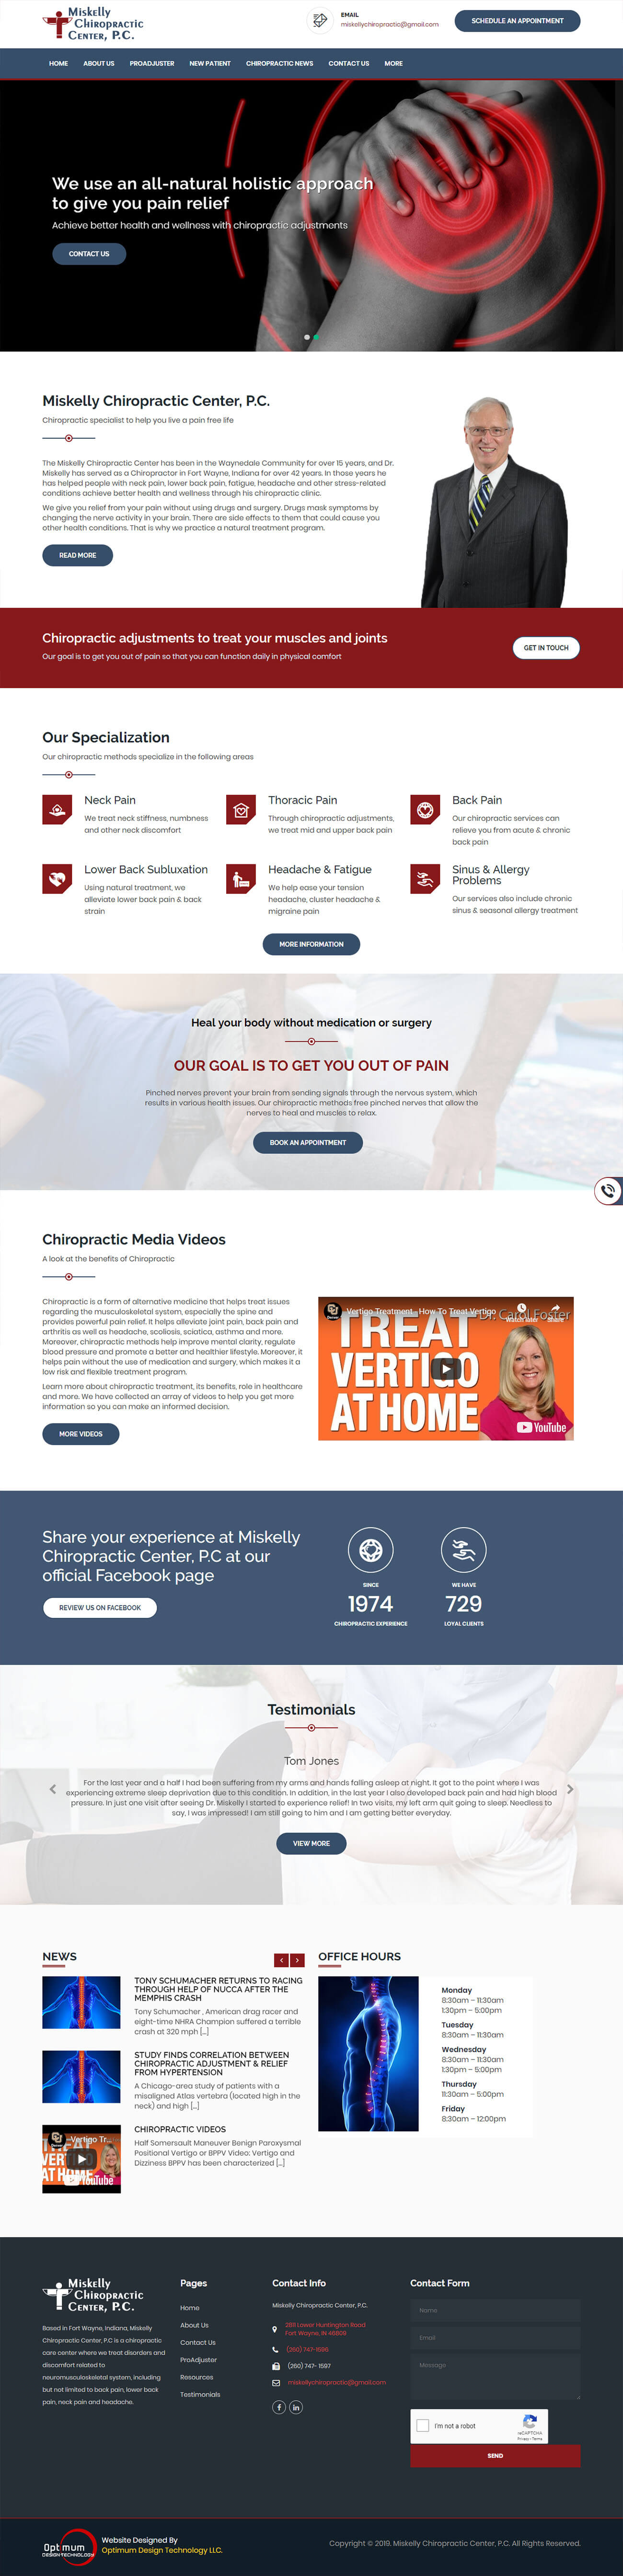 minneapolis-non-profit-organization-website-design